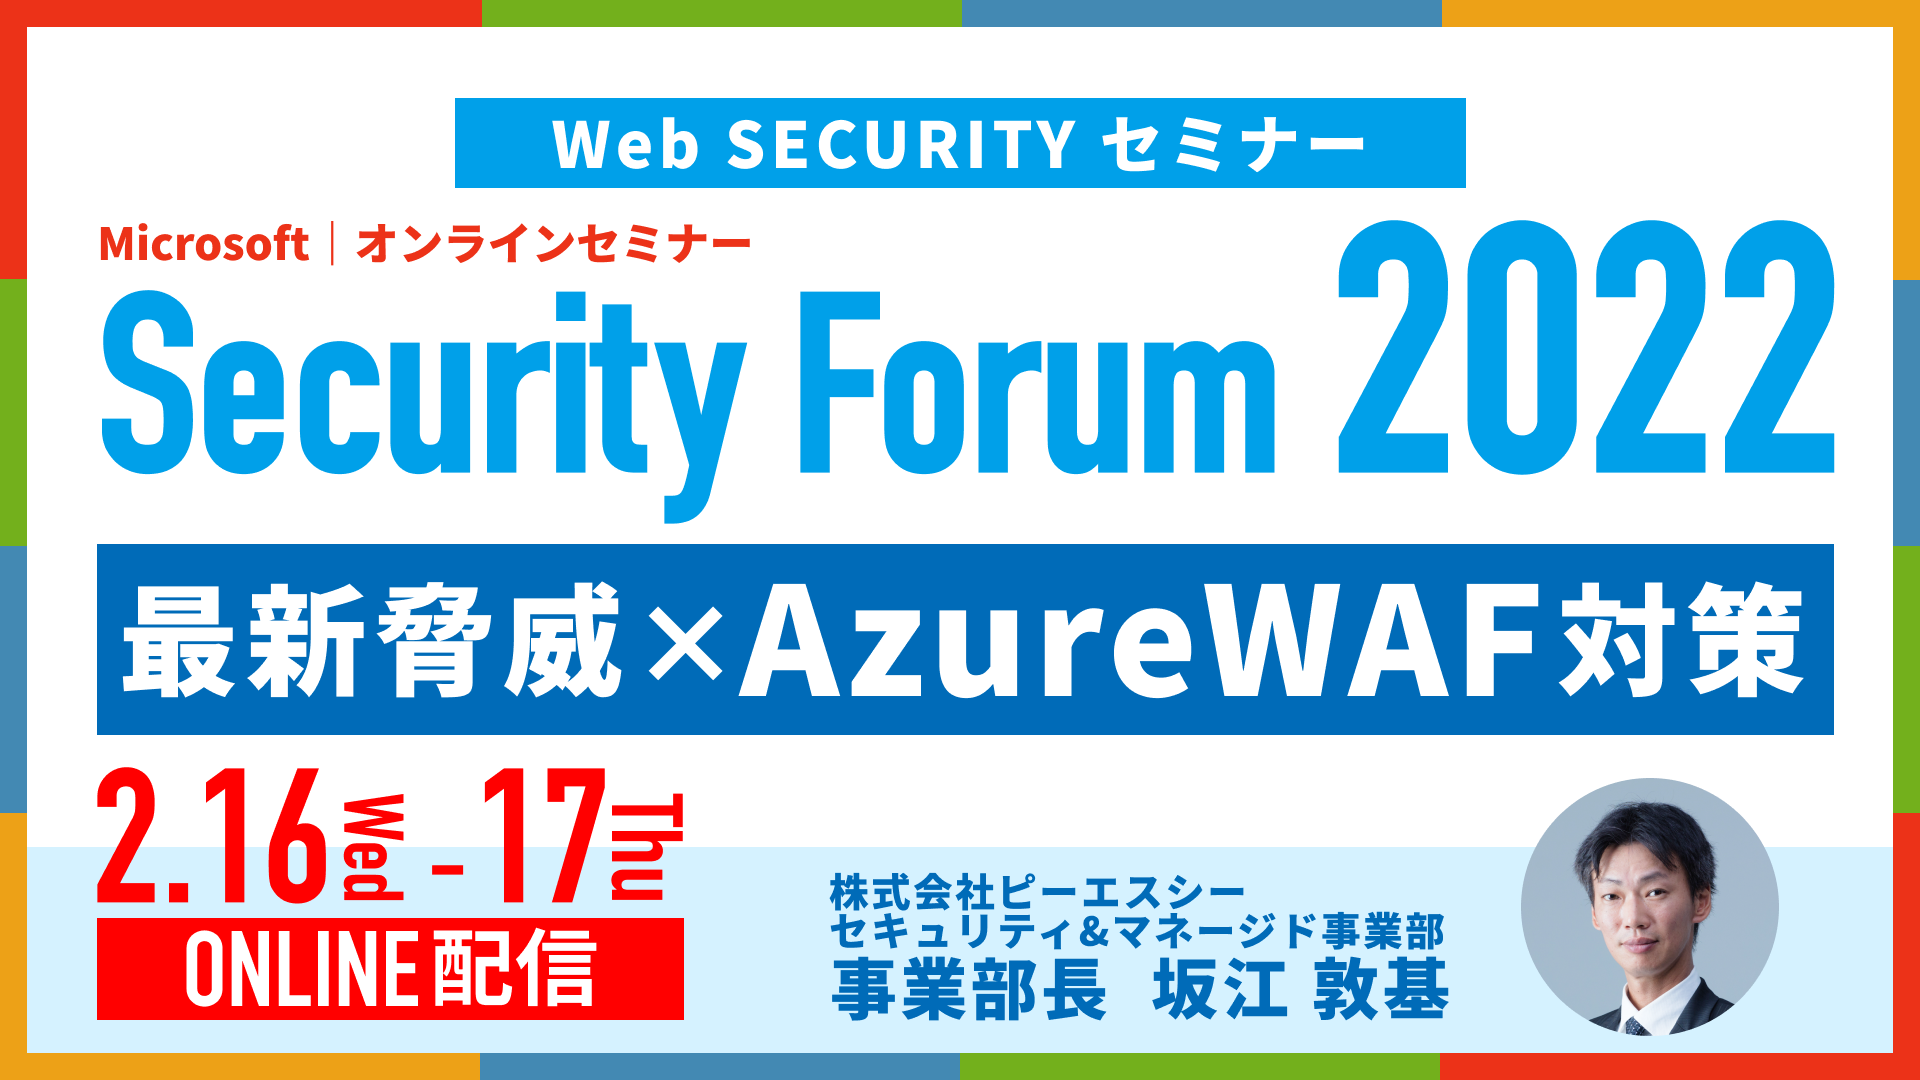 Microsoft「Security Forum 2022」